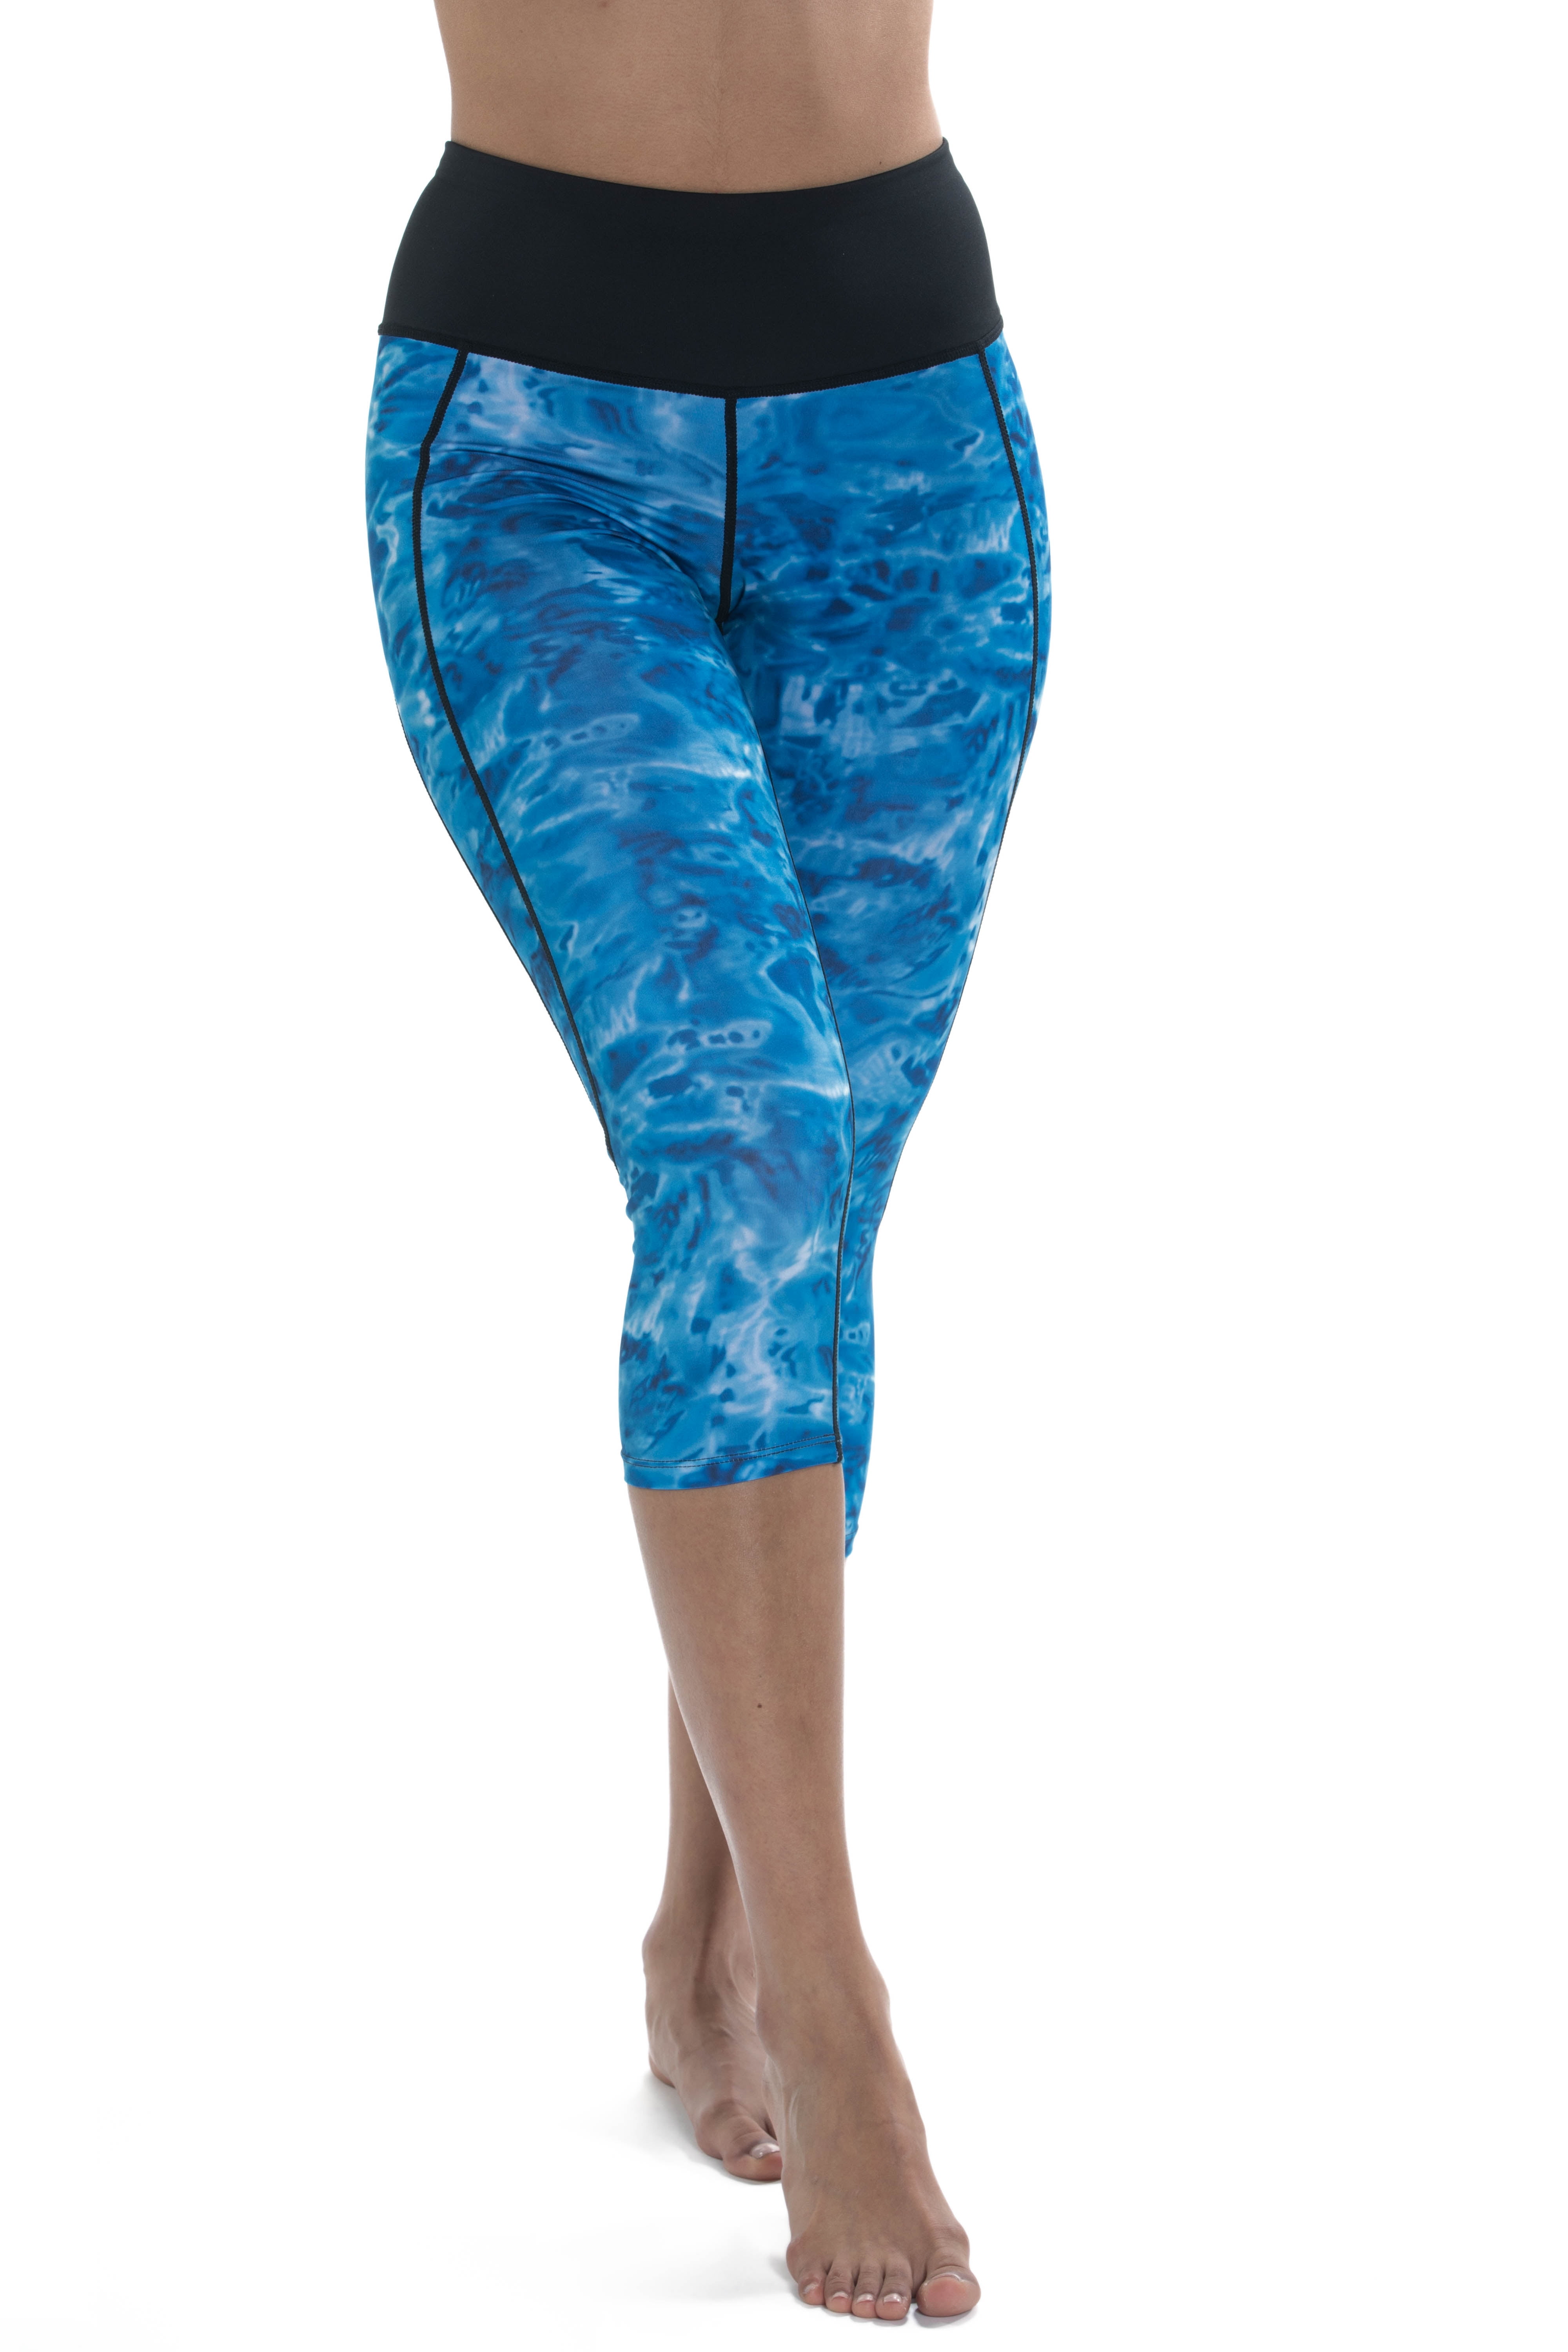 Aqua Design High Waisted Capri Leggings for Women: Liquid Purple/Black size  X-Large 